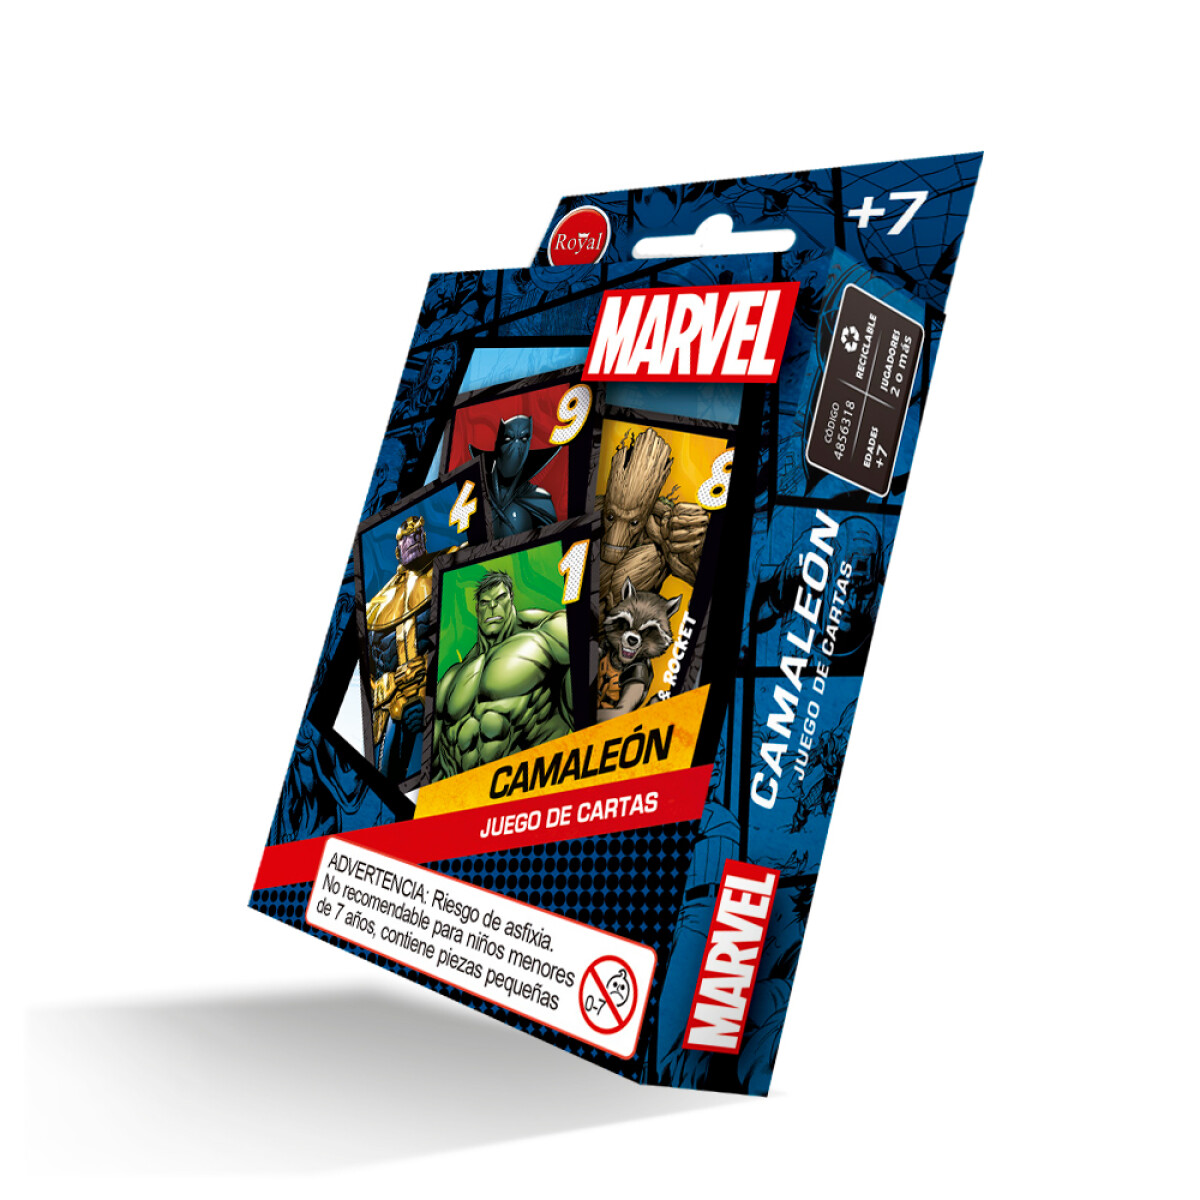 Camaleon Pocket Marvel Royal - 001 